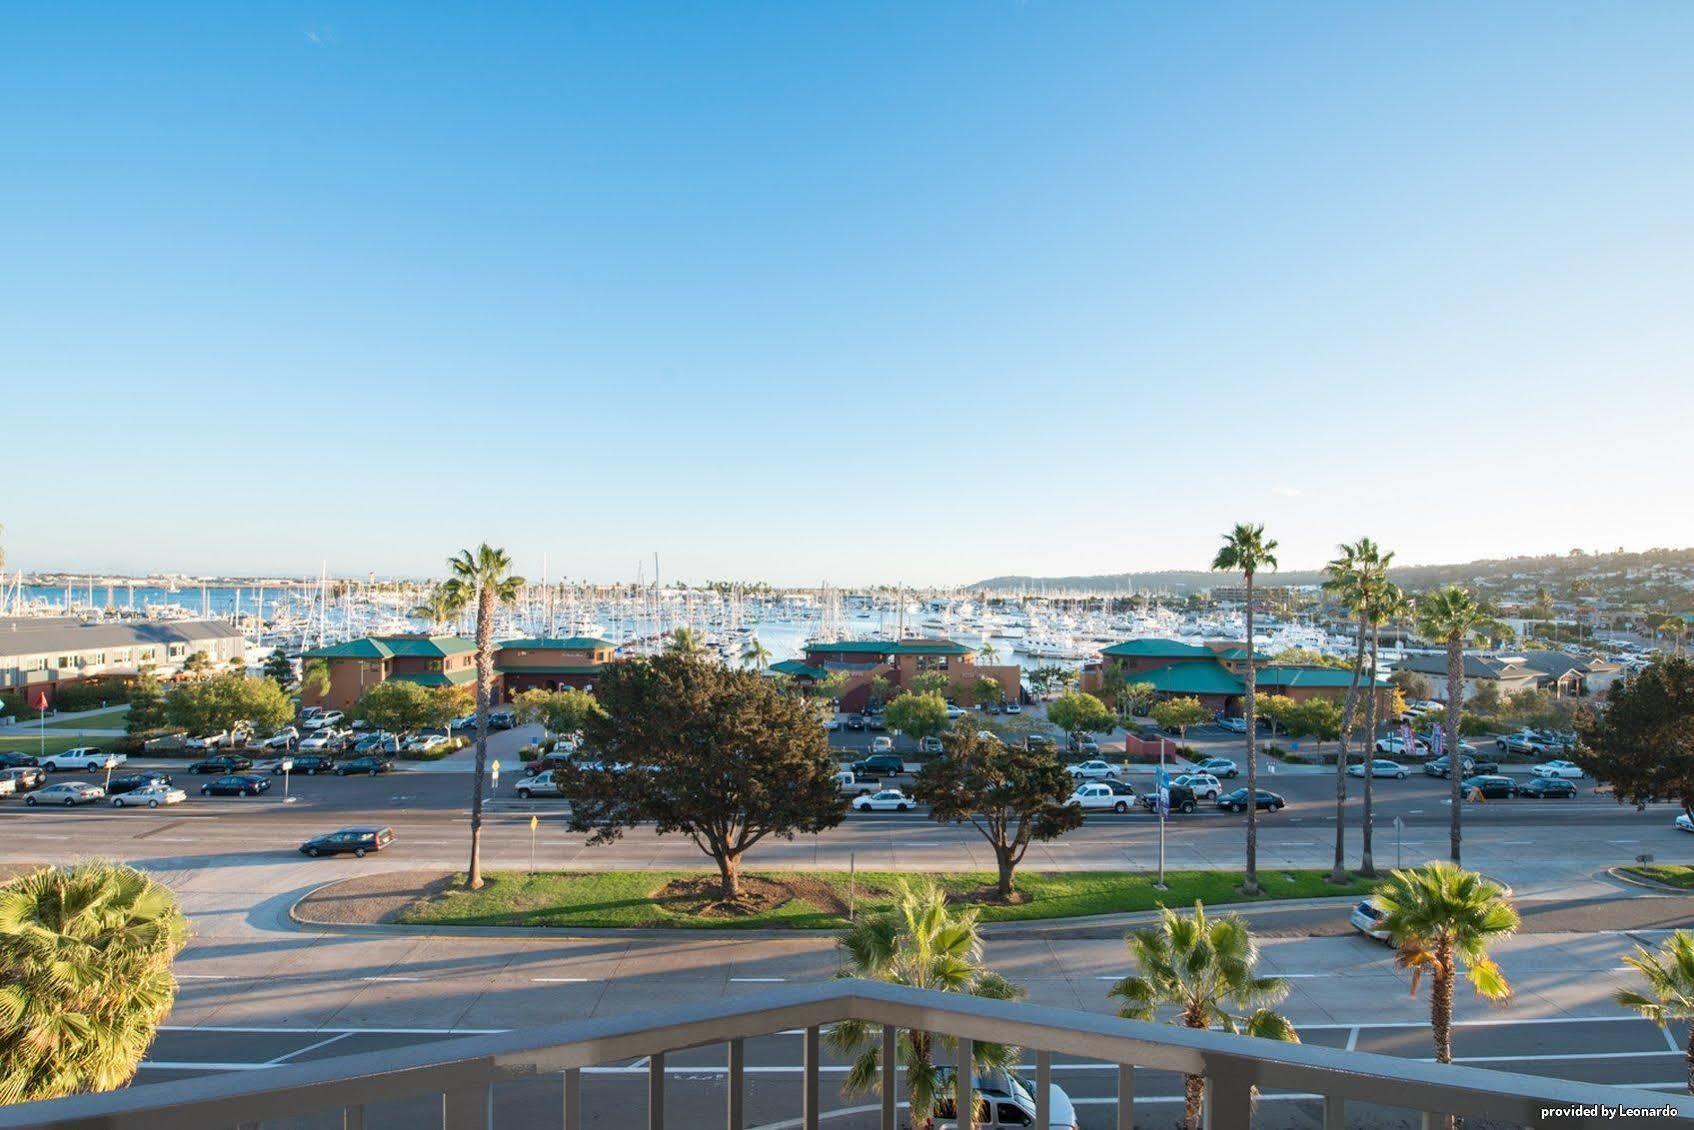 Best Western Yacht Harbor Hotel San Diego Buitenkant foto